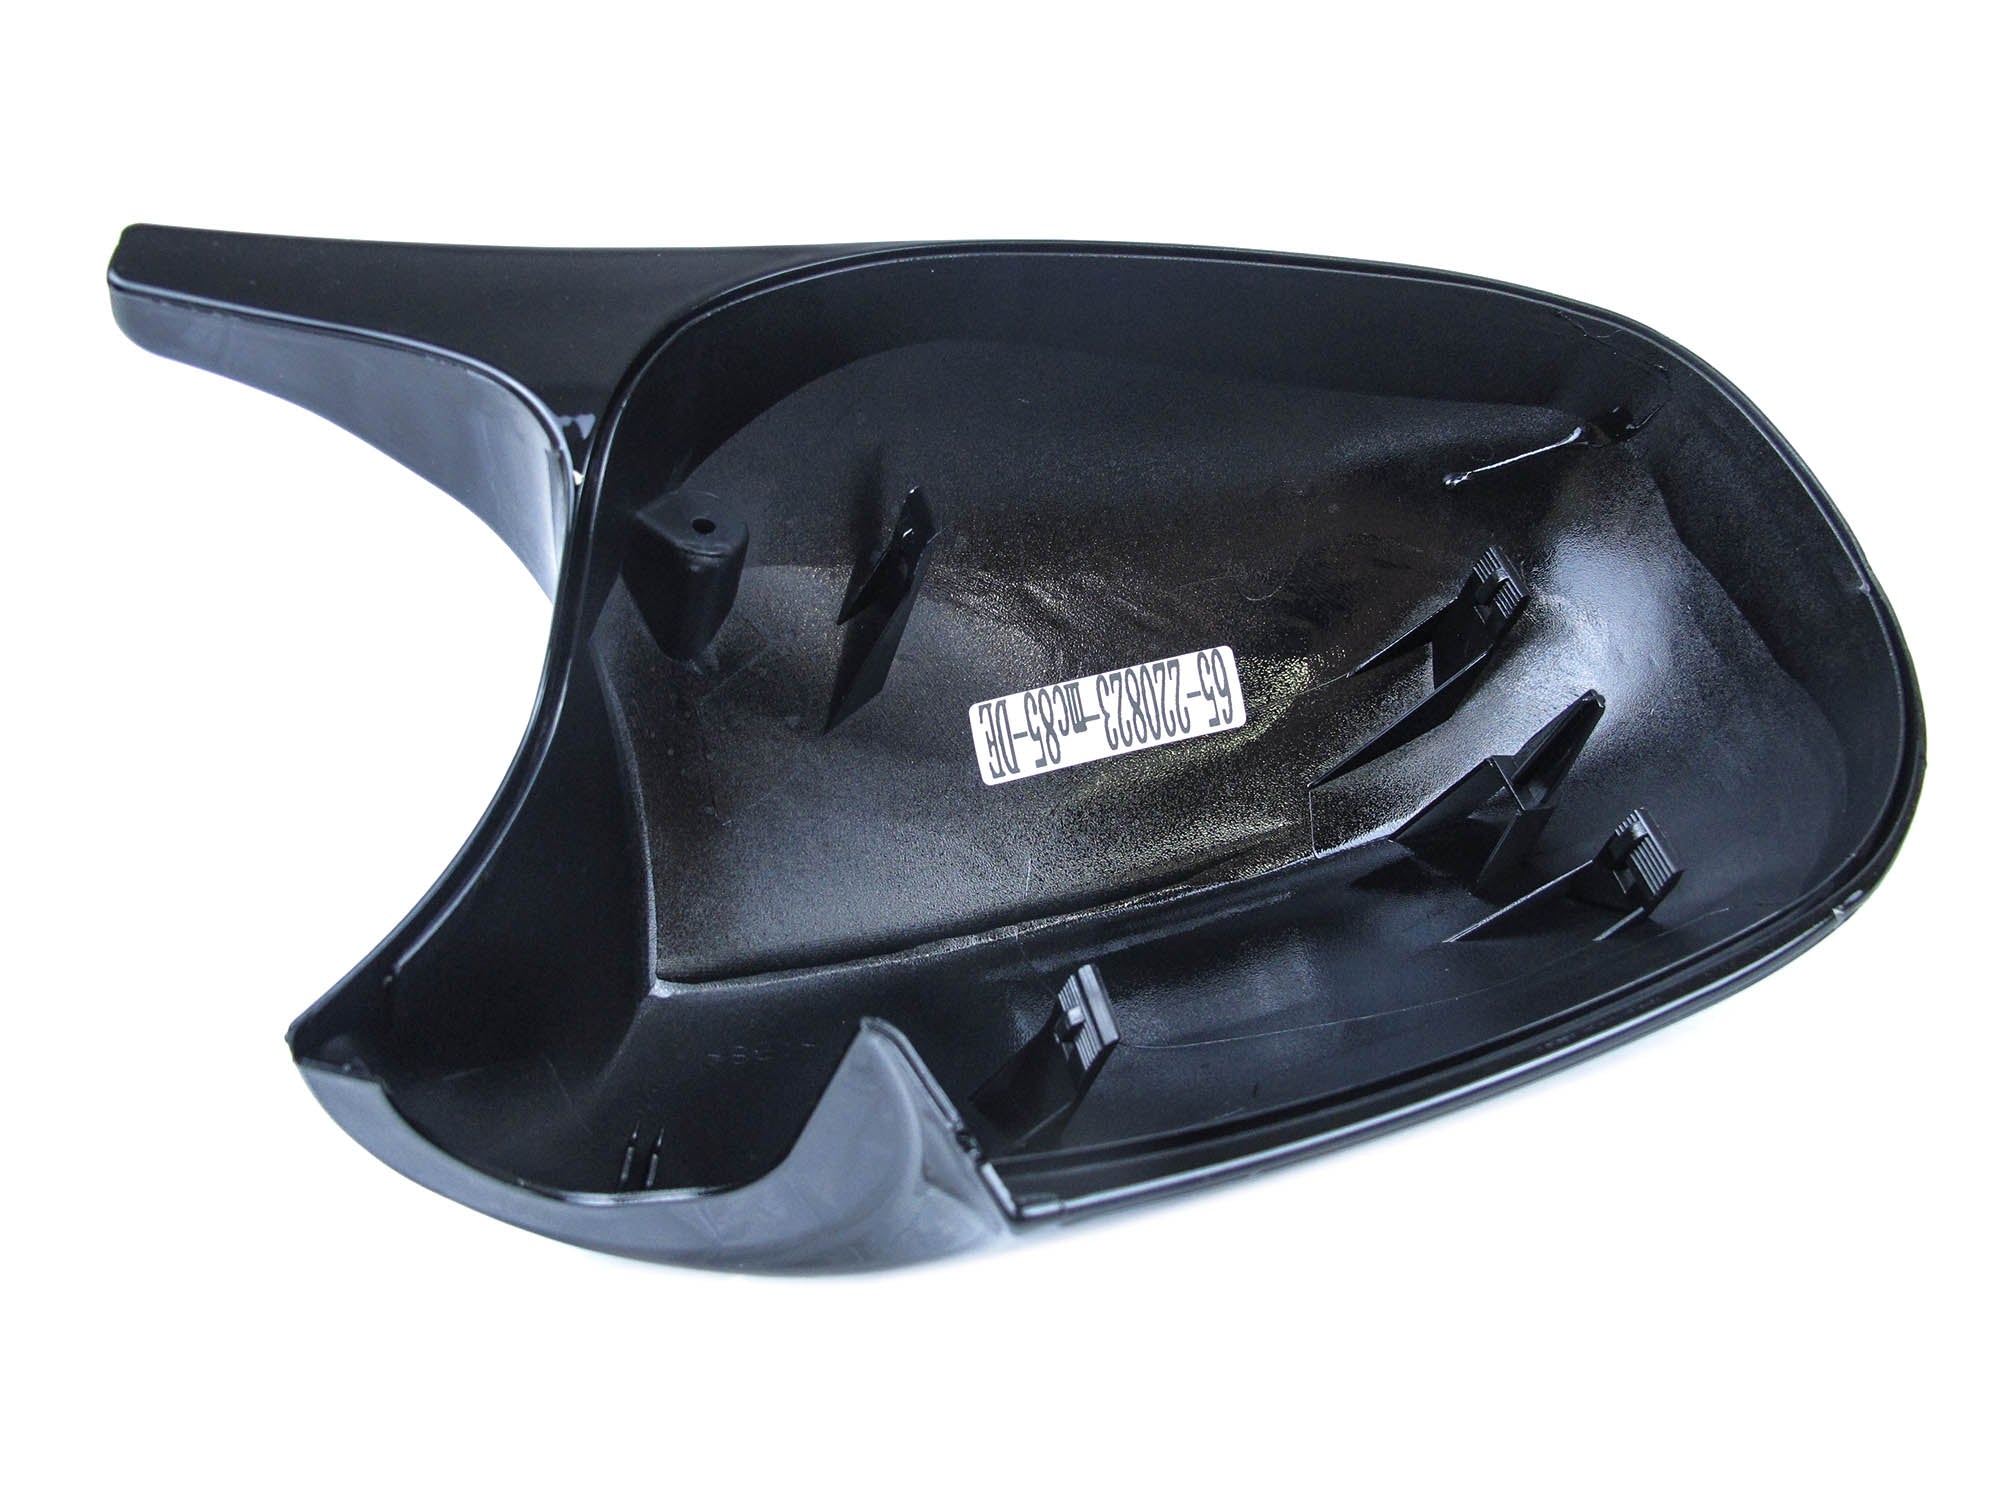 Set Sport Spiegelkappen schwarz glanz passt auf BMW 3er E90 E91 E92 E93 nur  LCI Facelift Modelle